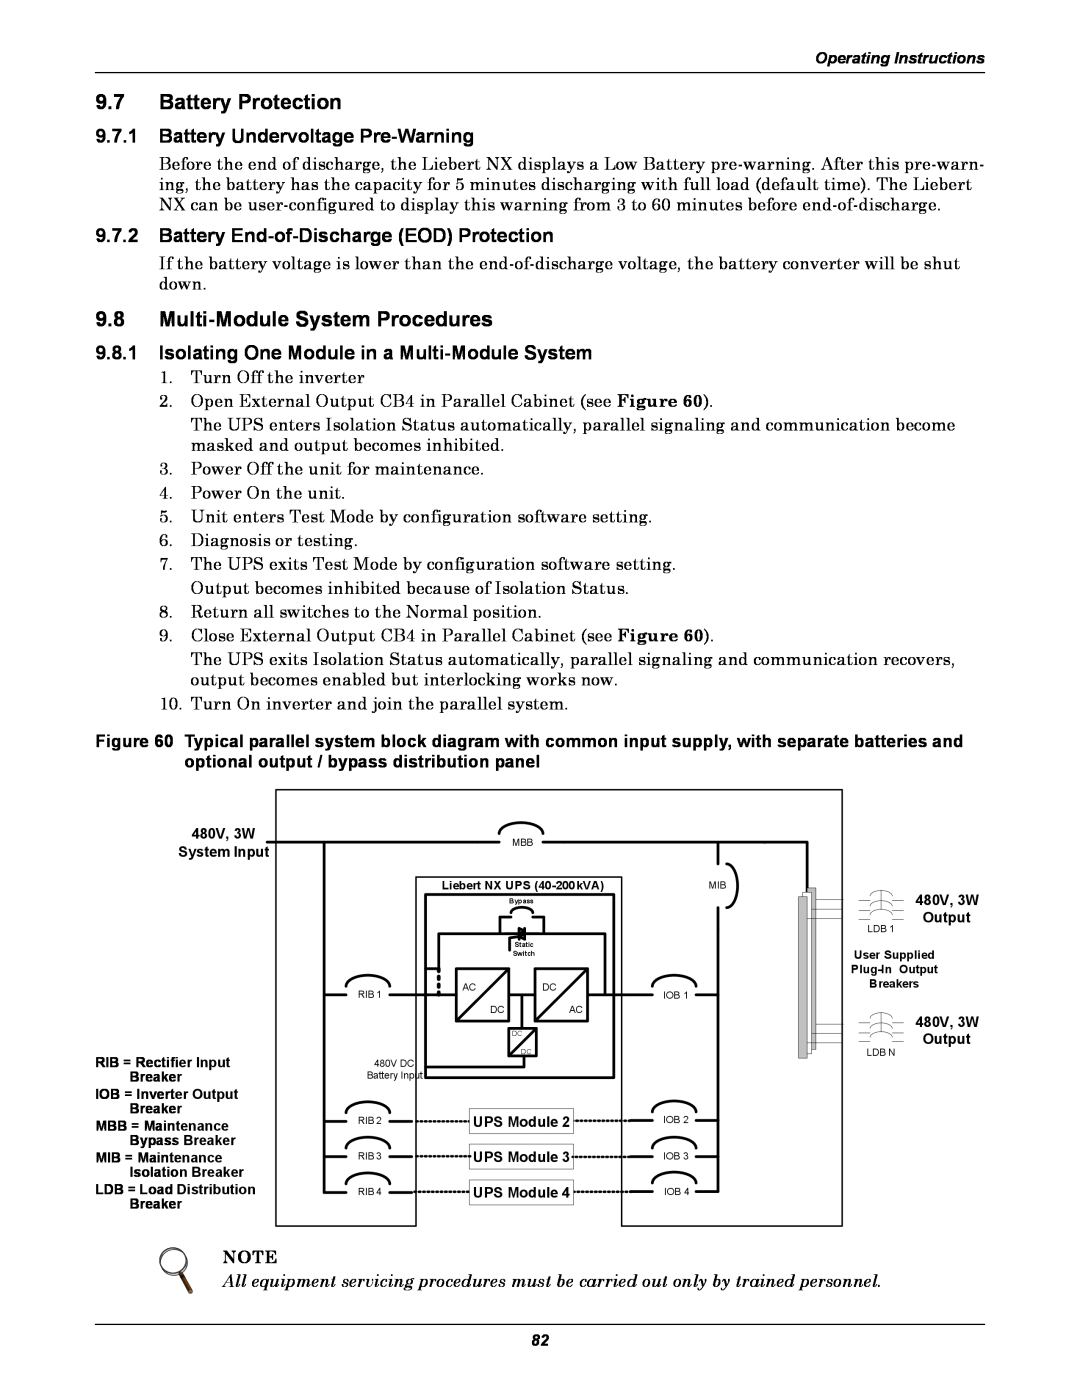 Emerson 60HZ, 480V 9.7Battery Protection, 9.8Multi-ModuleSystem Procedures, 9.7.1Battery Undervoltage Pre-Warning 